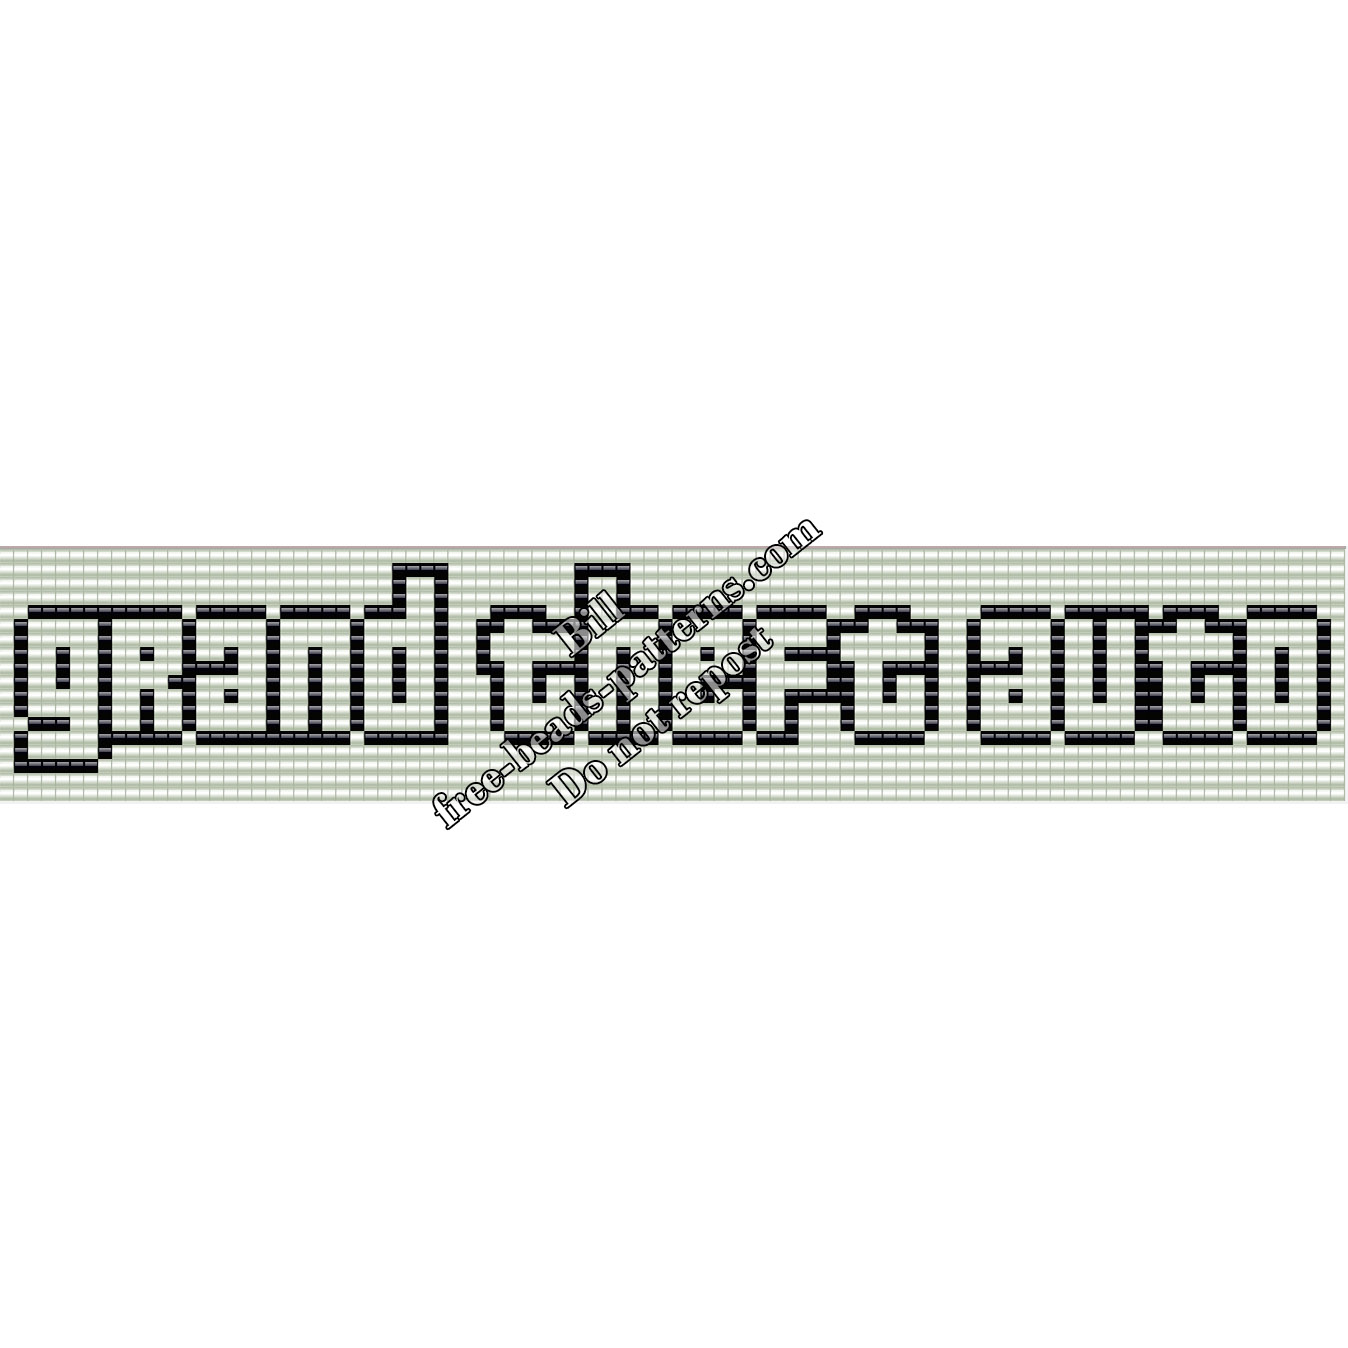 Grand Theft Auto logo free perler beads pattern (1)